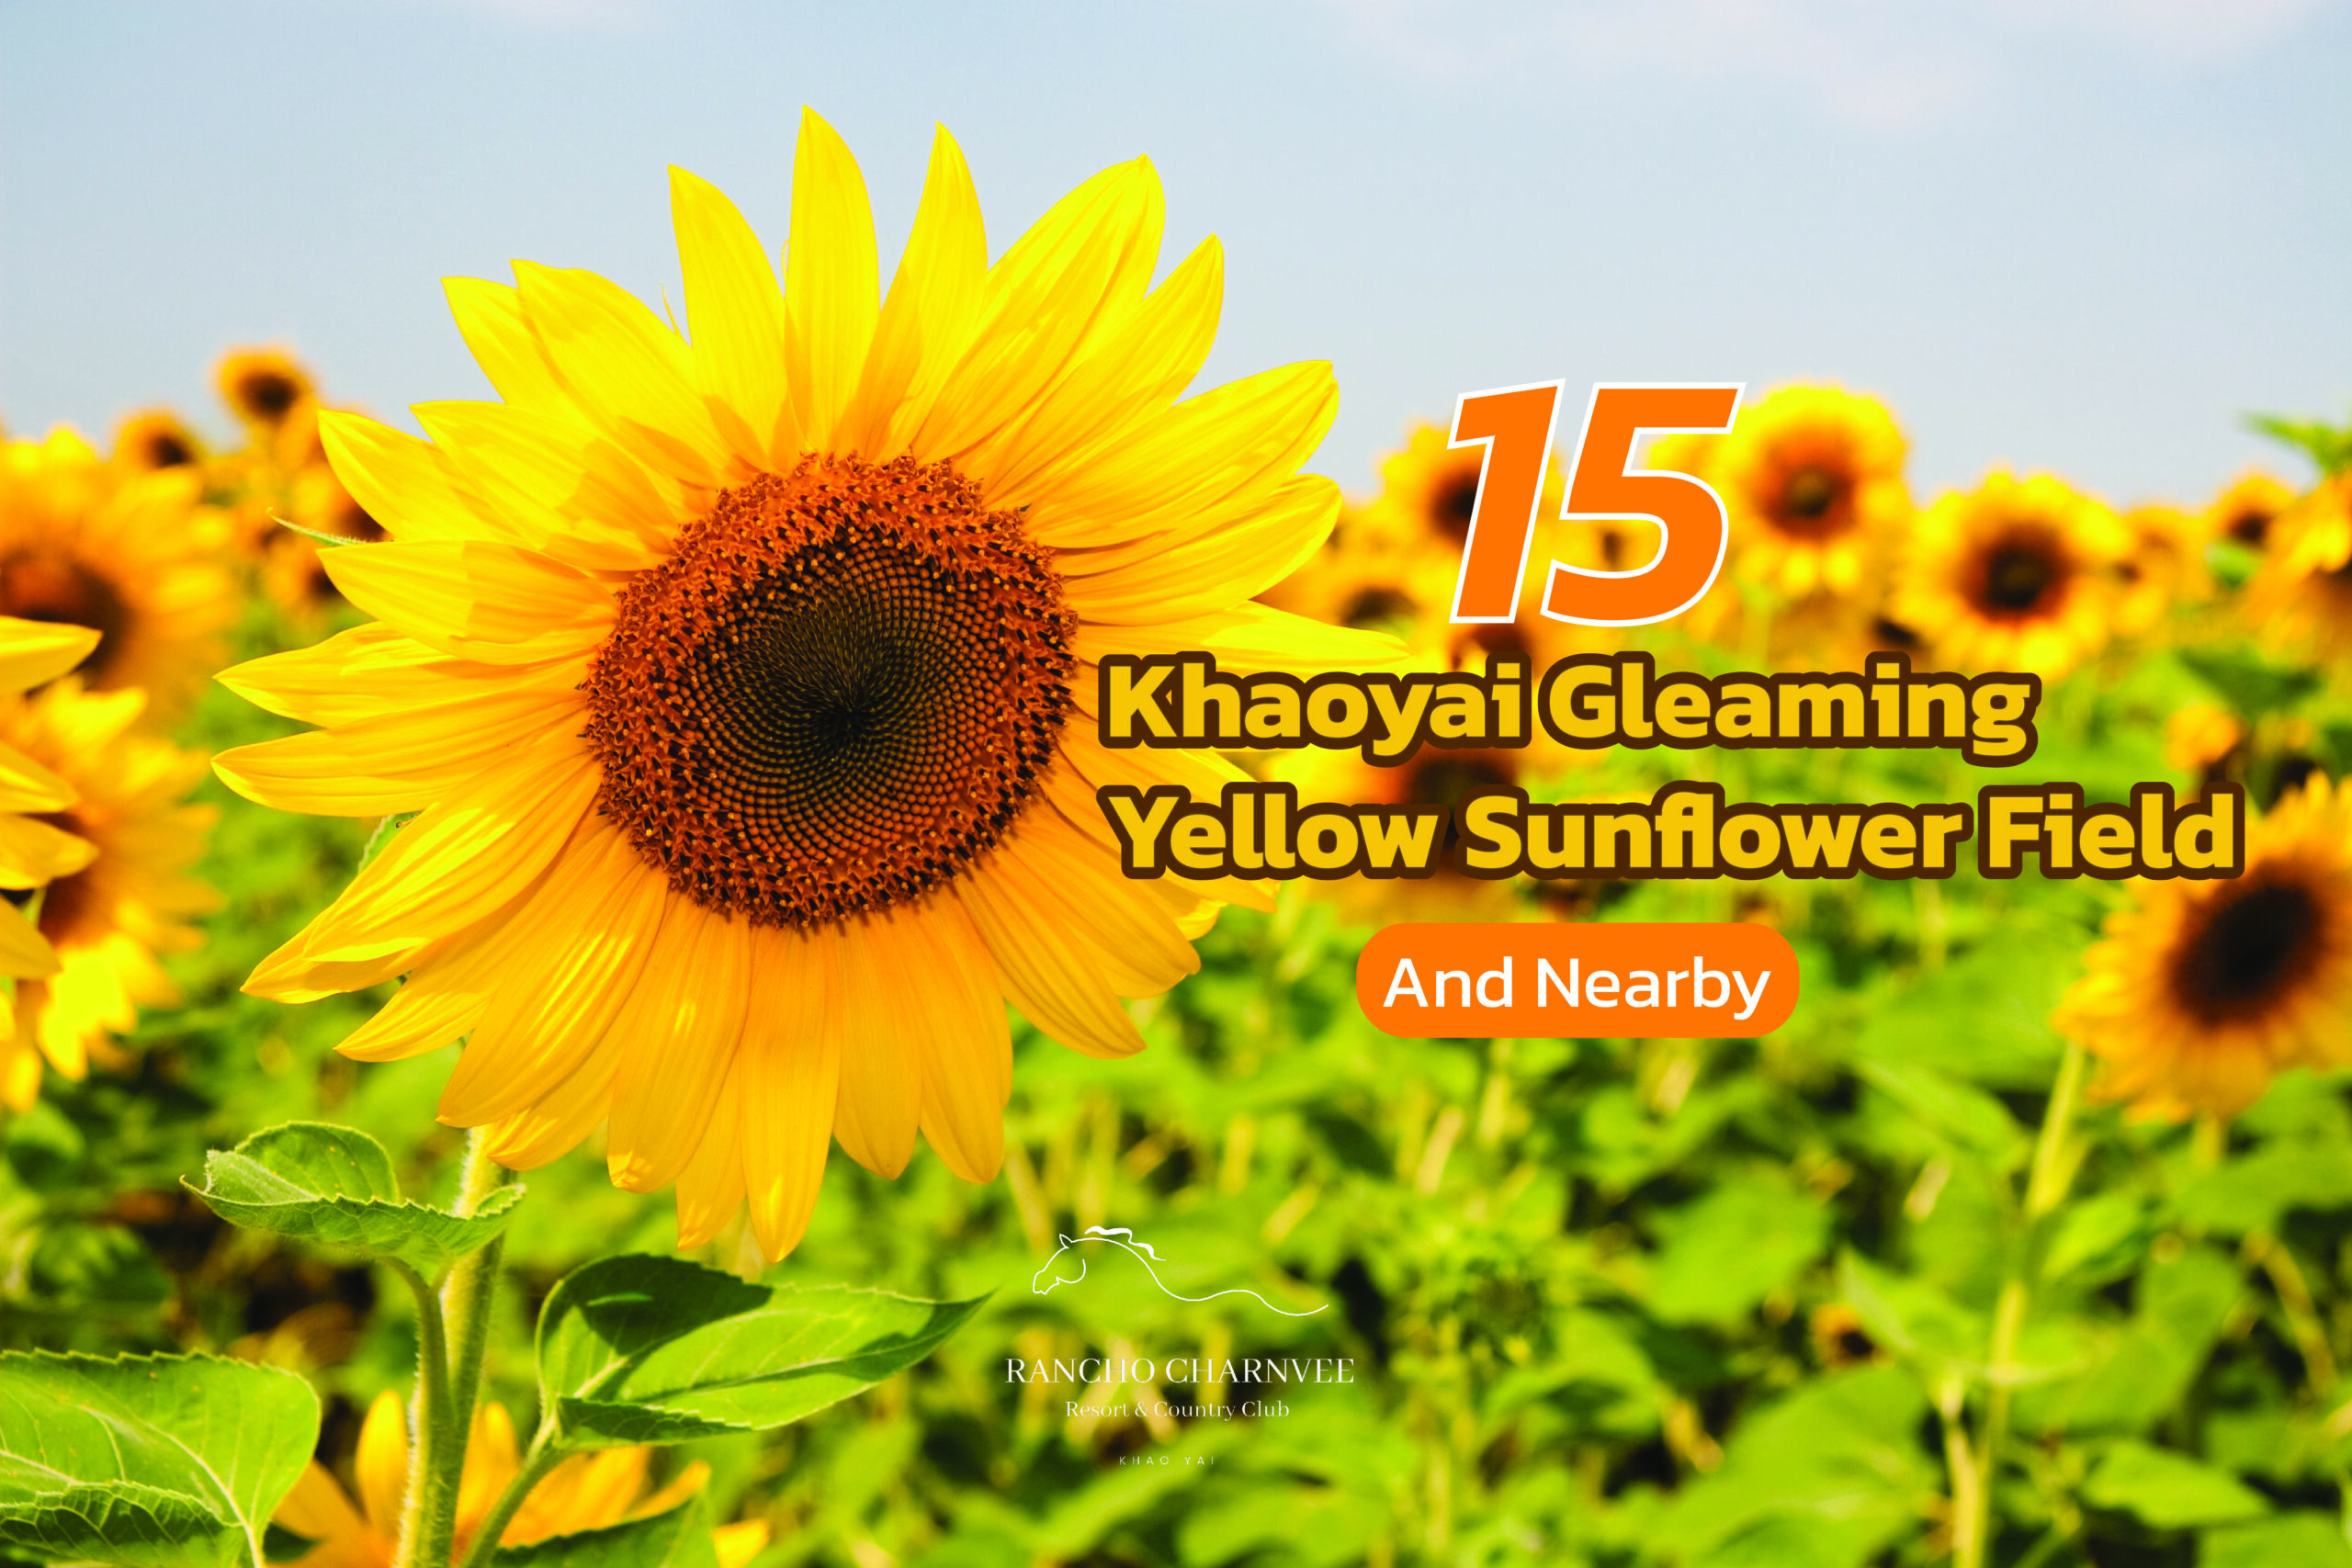 15 Khaoyai Gleaming Yellow Sunflower Fields And Nearby